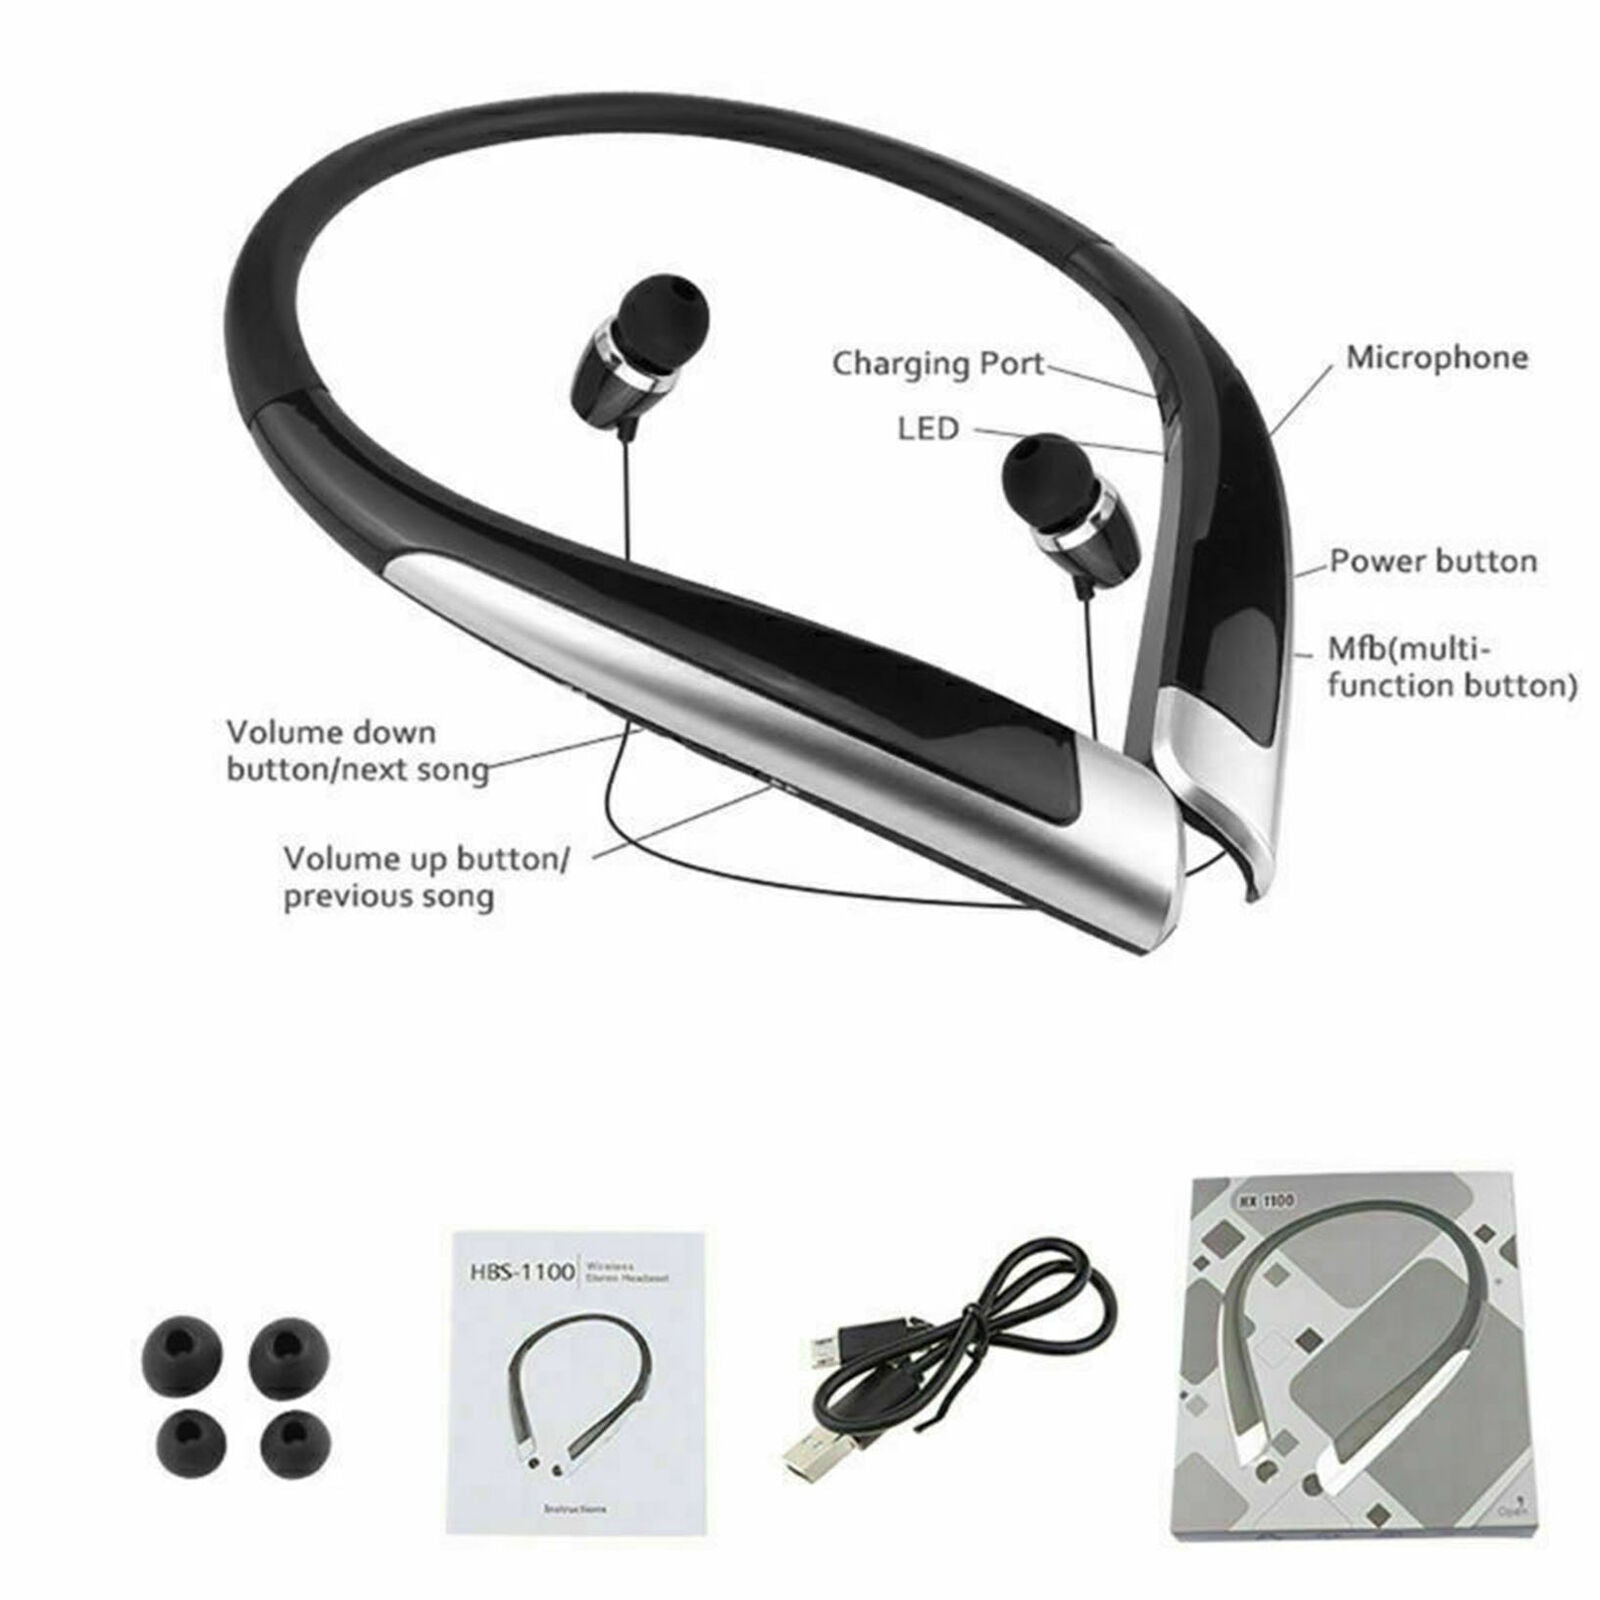 HBS-1100 Neckband Stereo Wireless Bluetooth Headphone Headset Noise Canceling